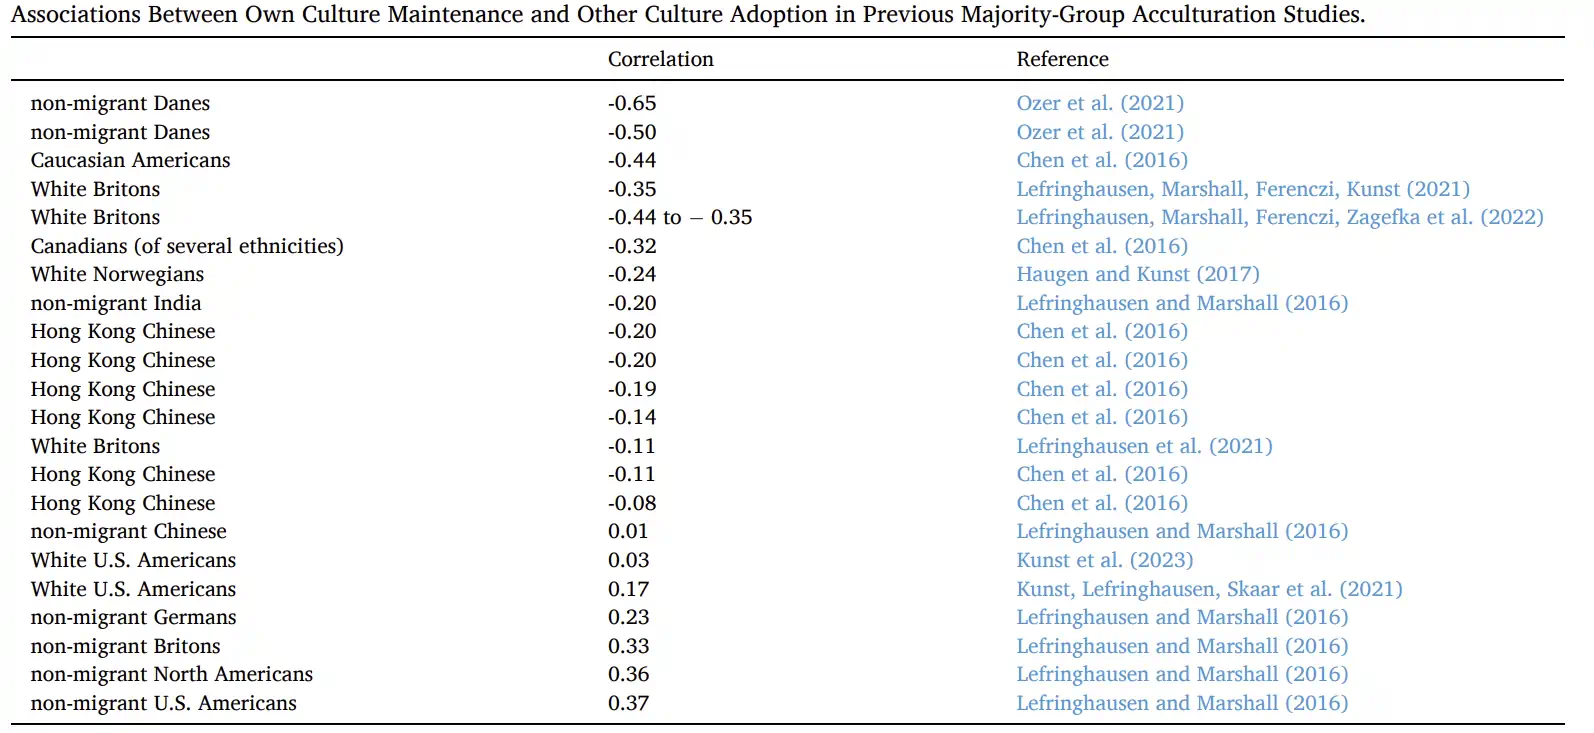 The correlation between majority acculturation orientations